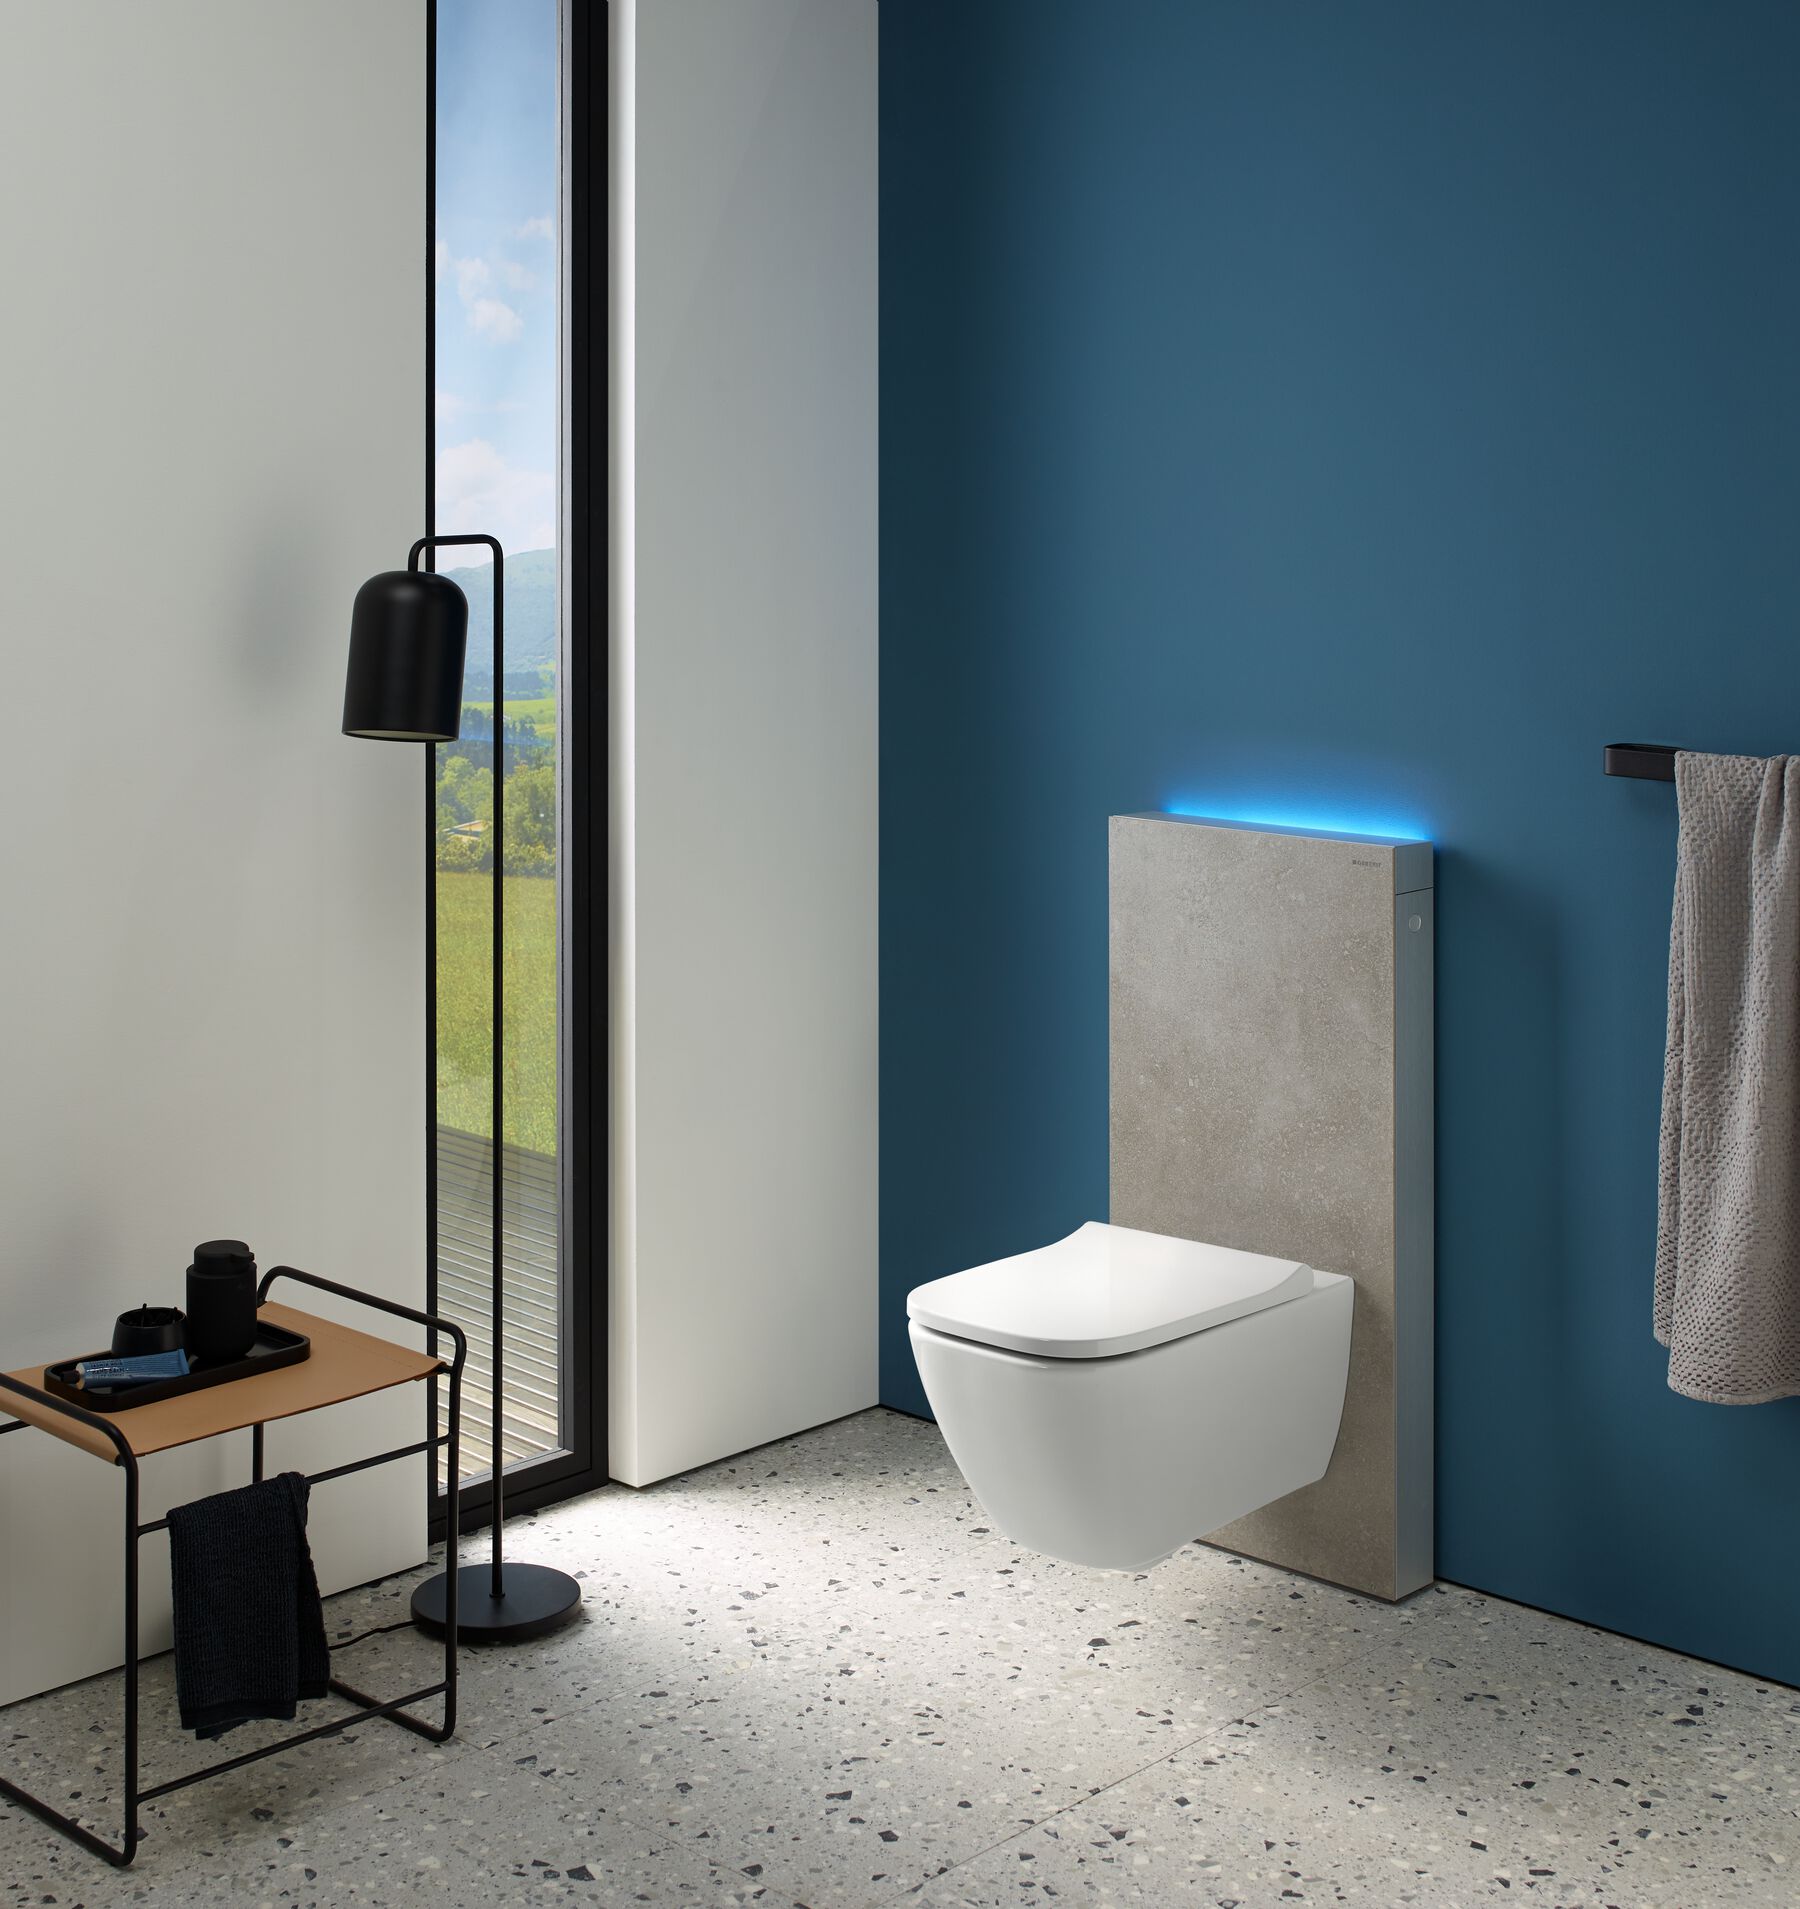 Monolith Plus sanitairmodule met Geberit toilet Smyle #geberit #monolith #toilet #badkamer #smyle